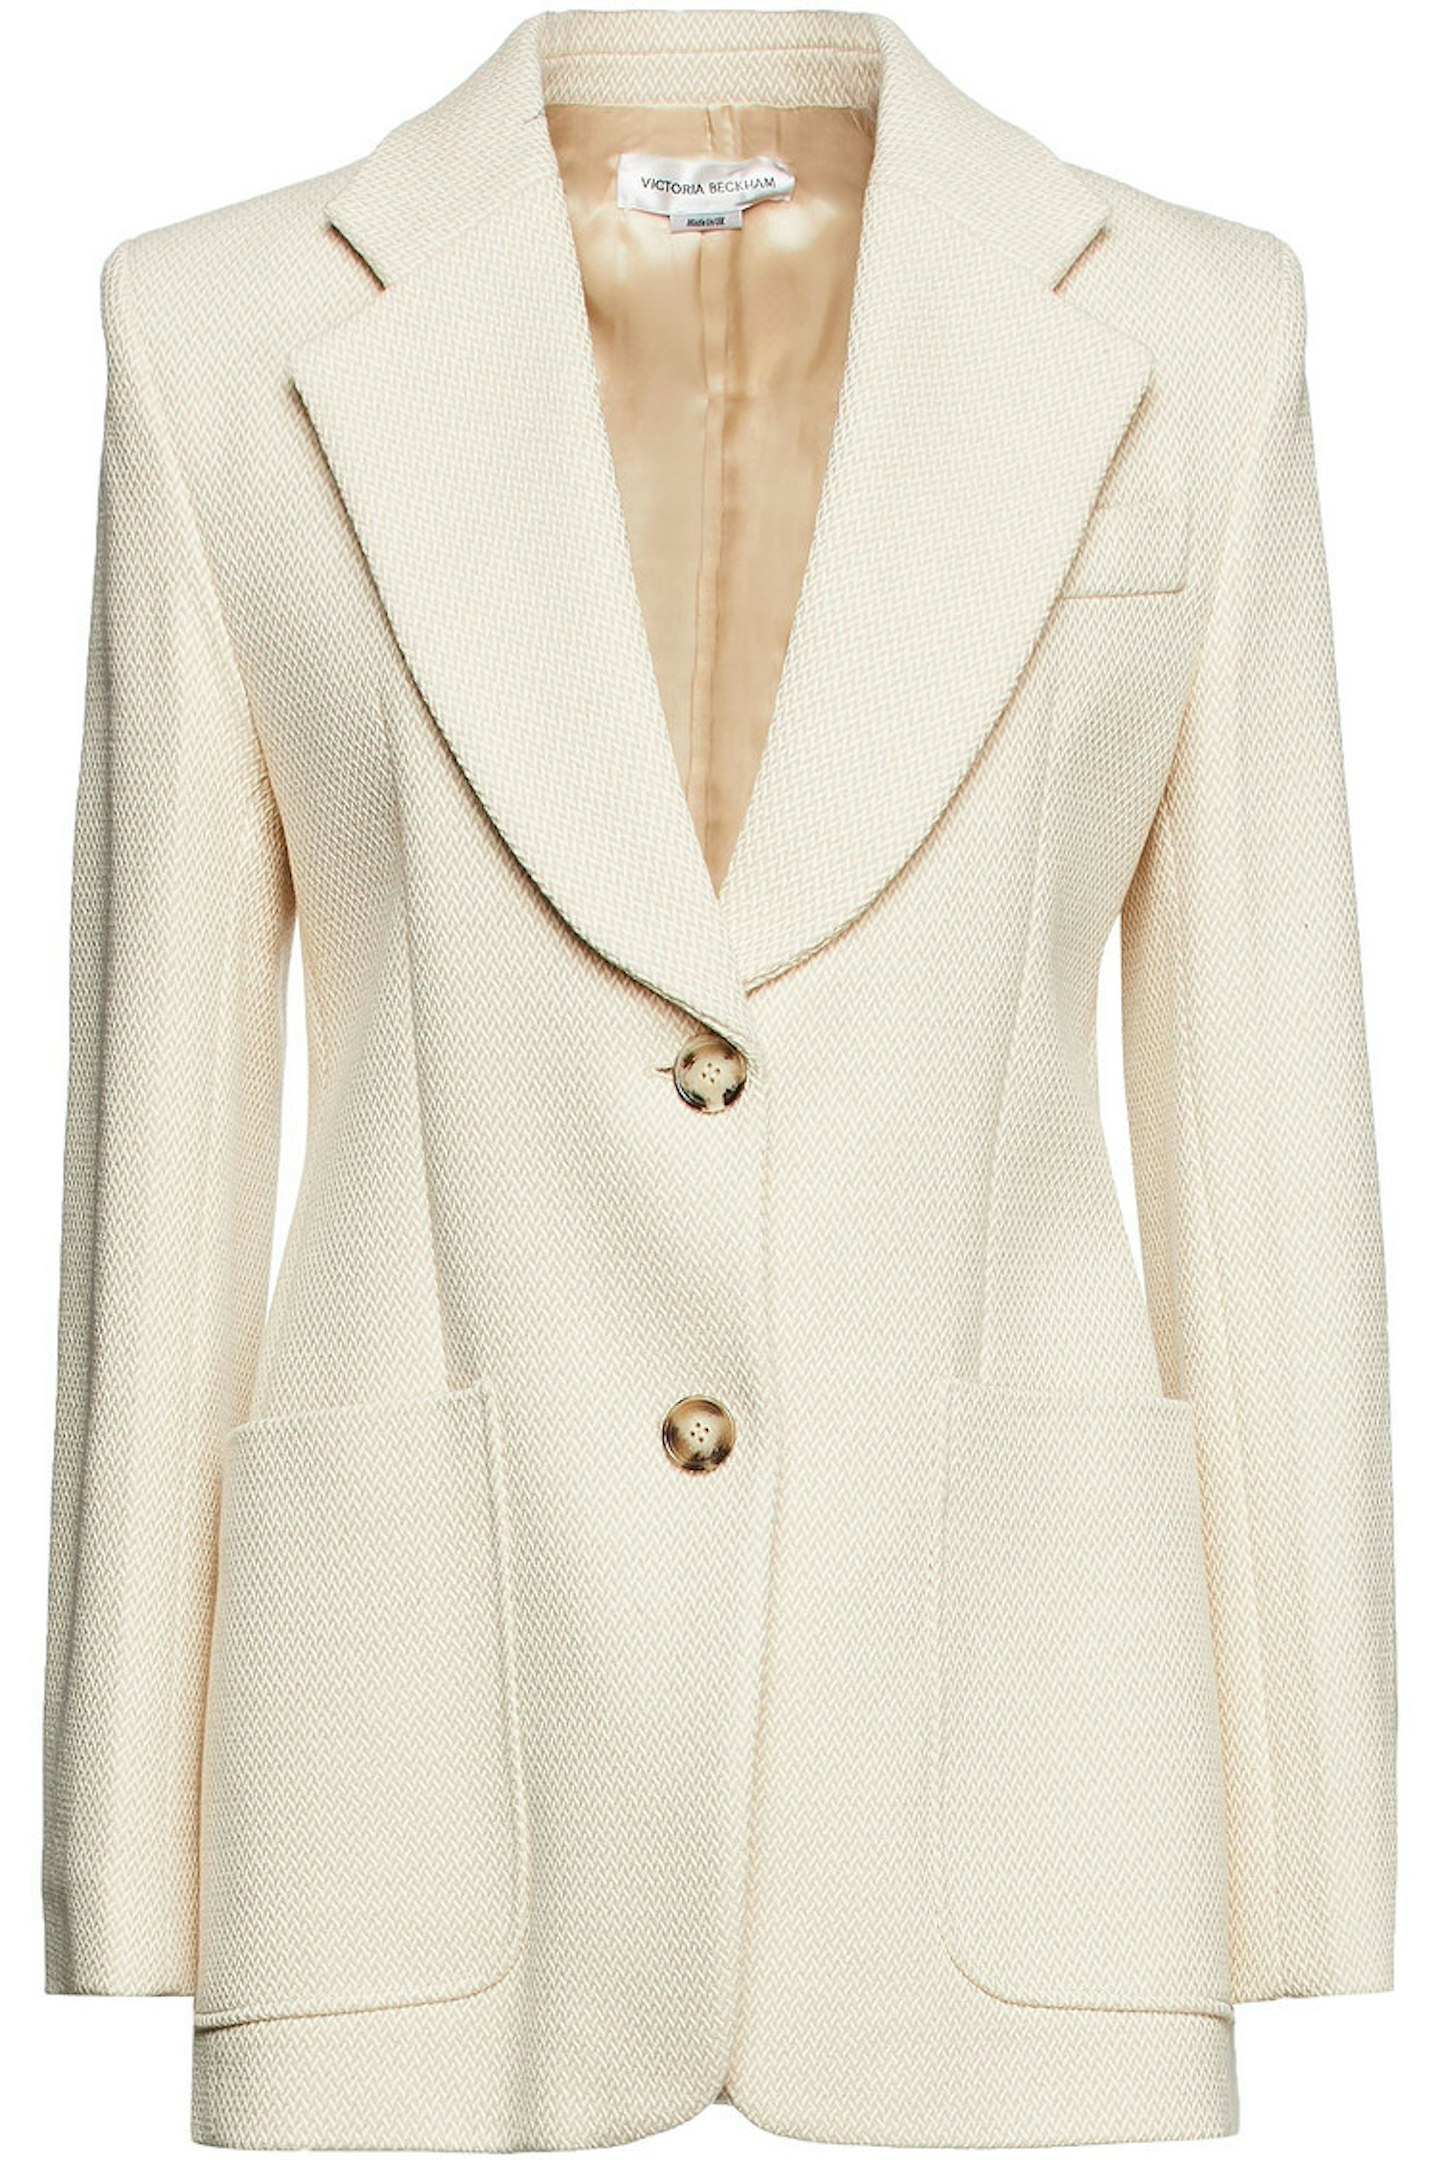 Victoria Beckham at The Outnet, Herringbone cotton-blend blazer, £725